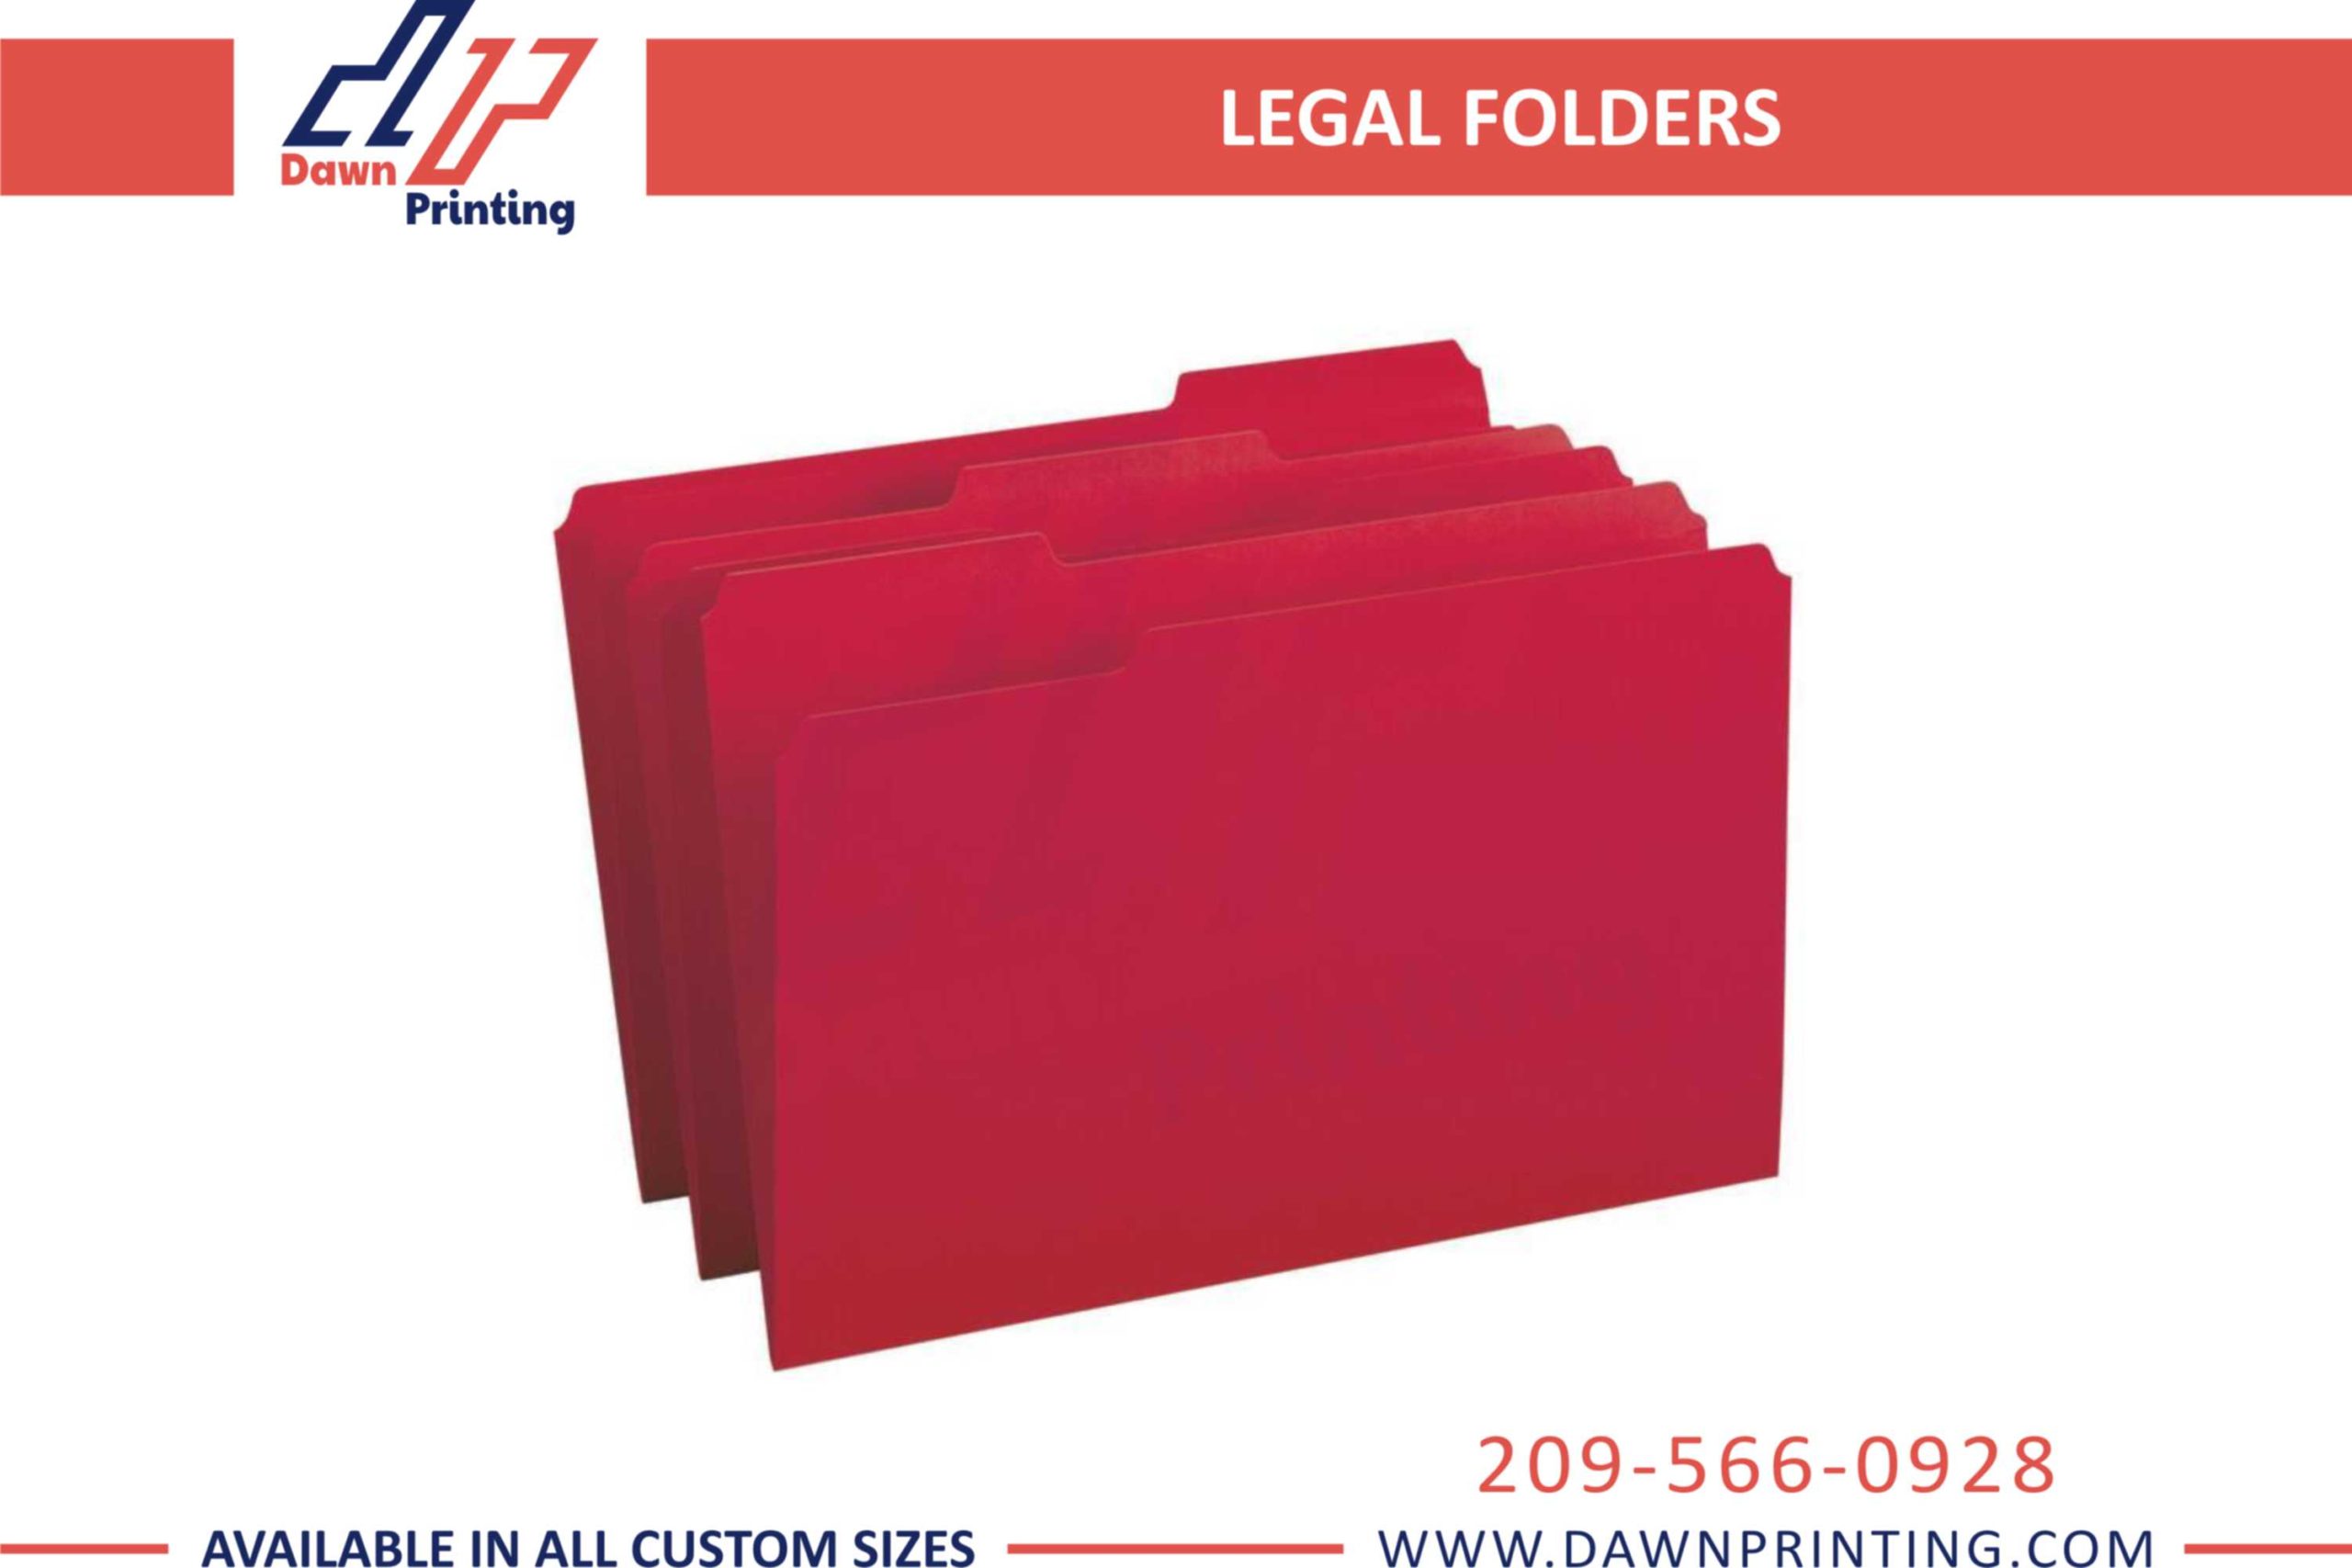 Custom Printed Legal Folders - Dawn Printing